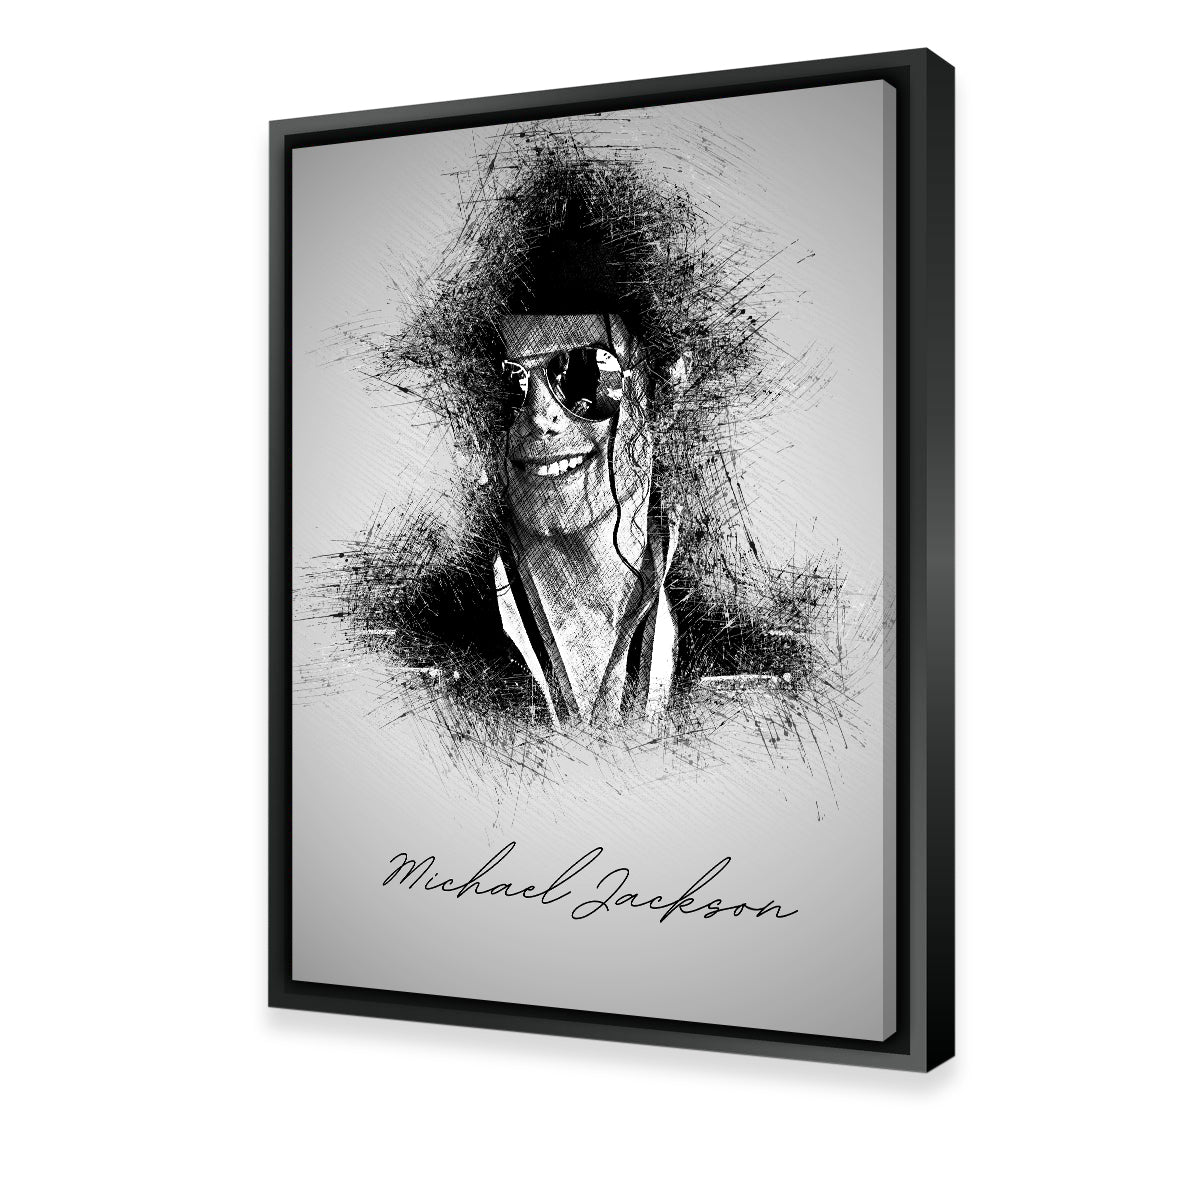 Michael Jackson Sketch